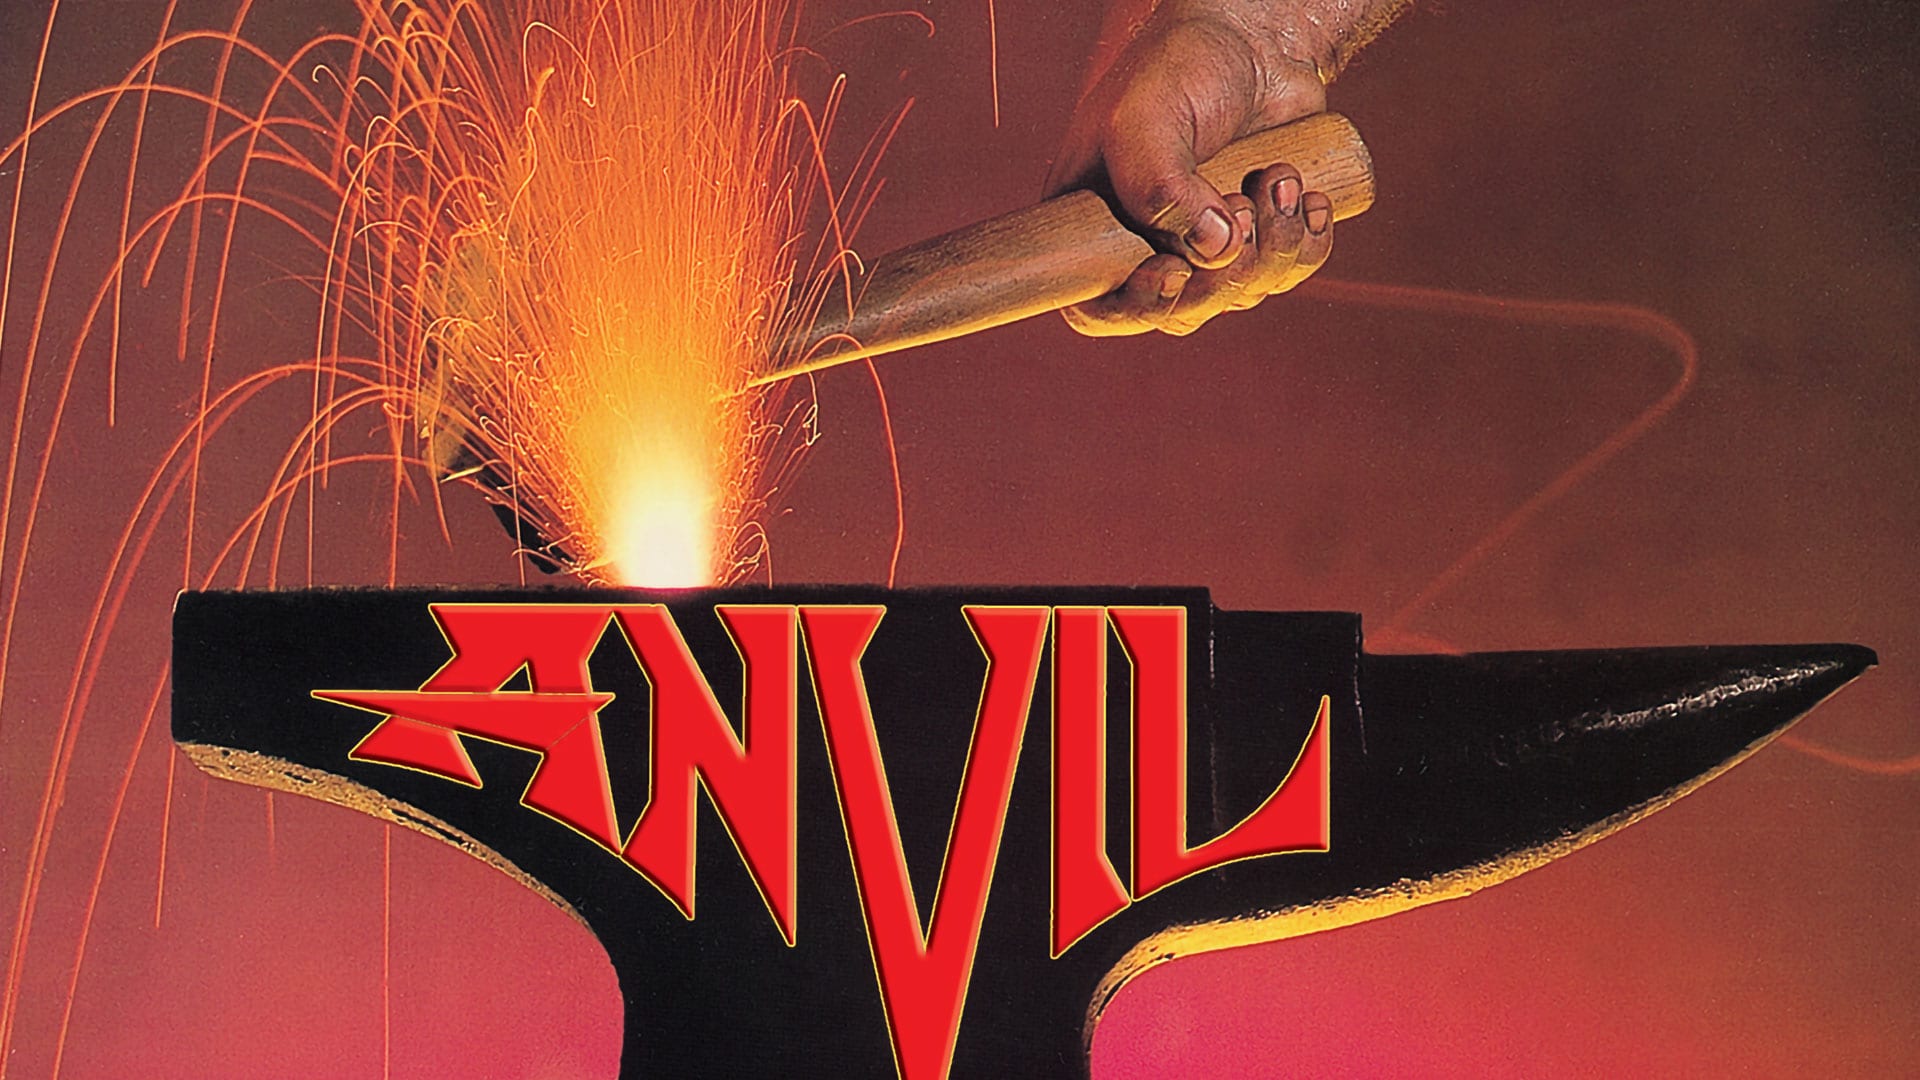 40 Years Ago: ANVIL release Hard 'n' Heavy